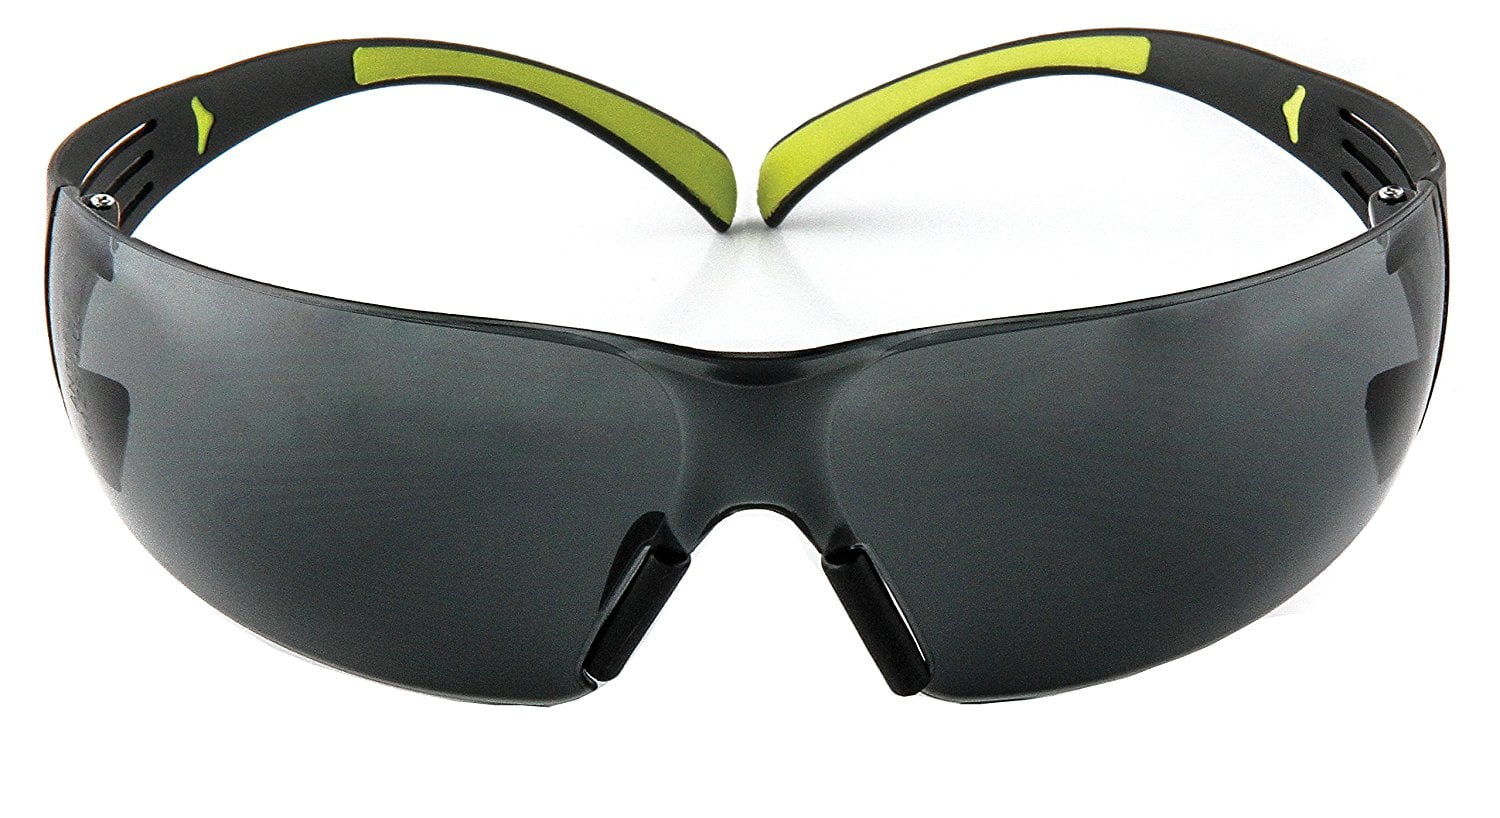 3M Moon Dawg Safety Glasses Eye Protection Anti-Fog Black 11216-00000-20 2-Pair 